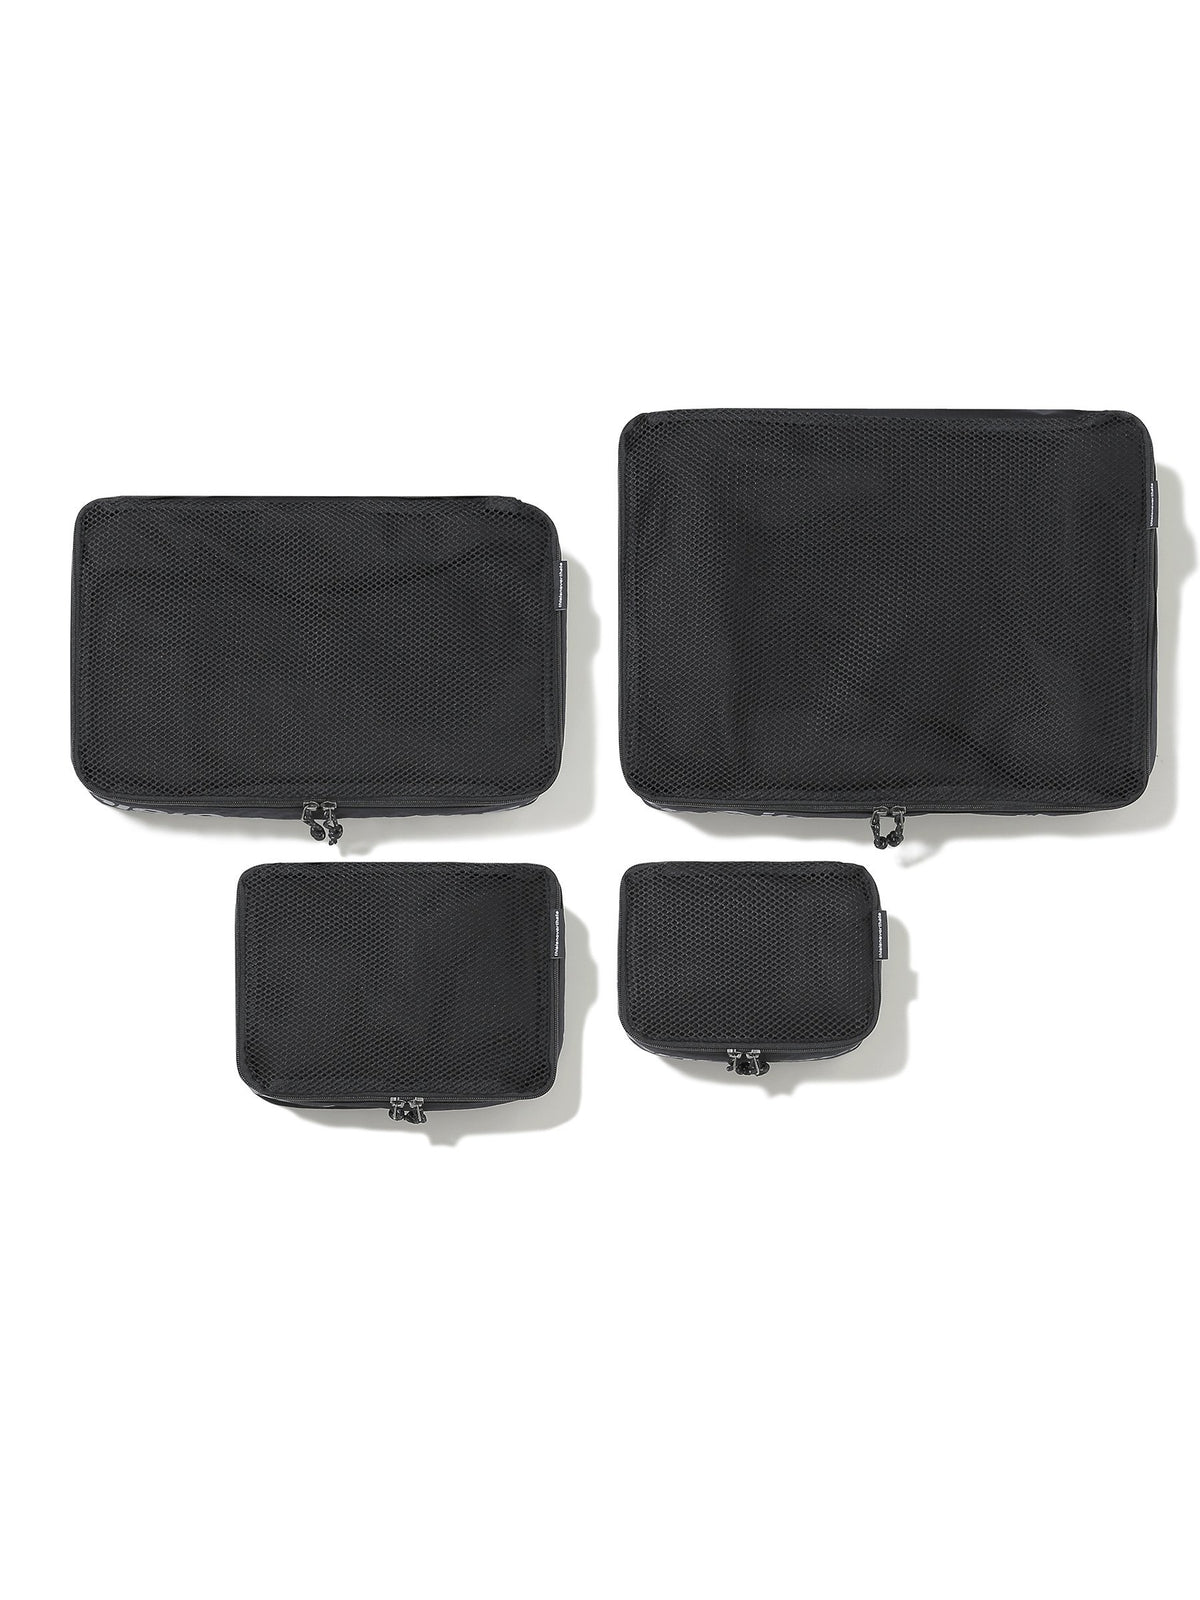 CORDURA® 330D Nylon SP Packing Cube Bag